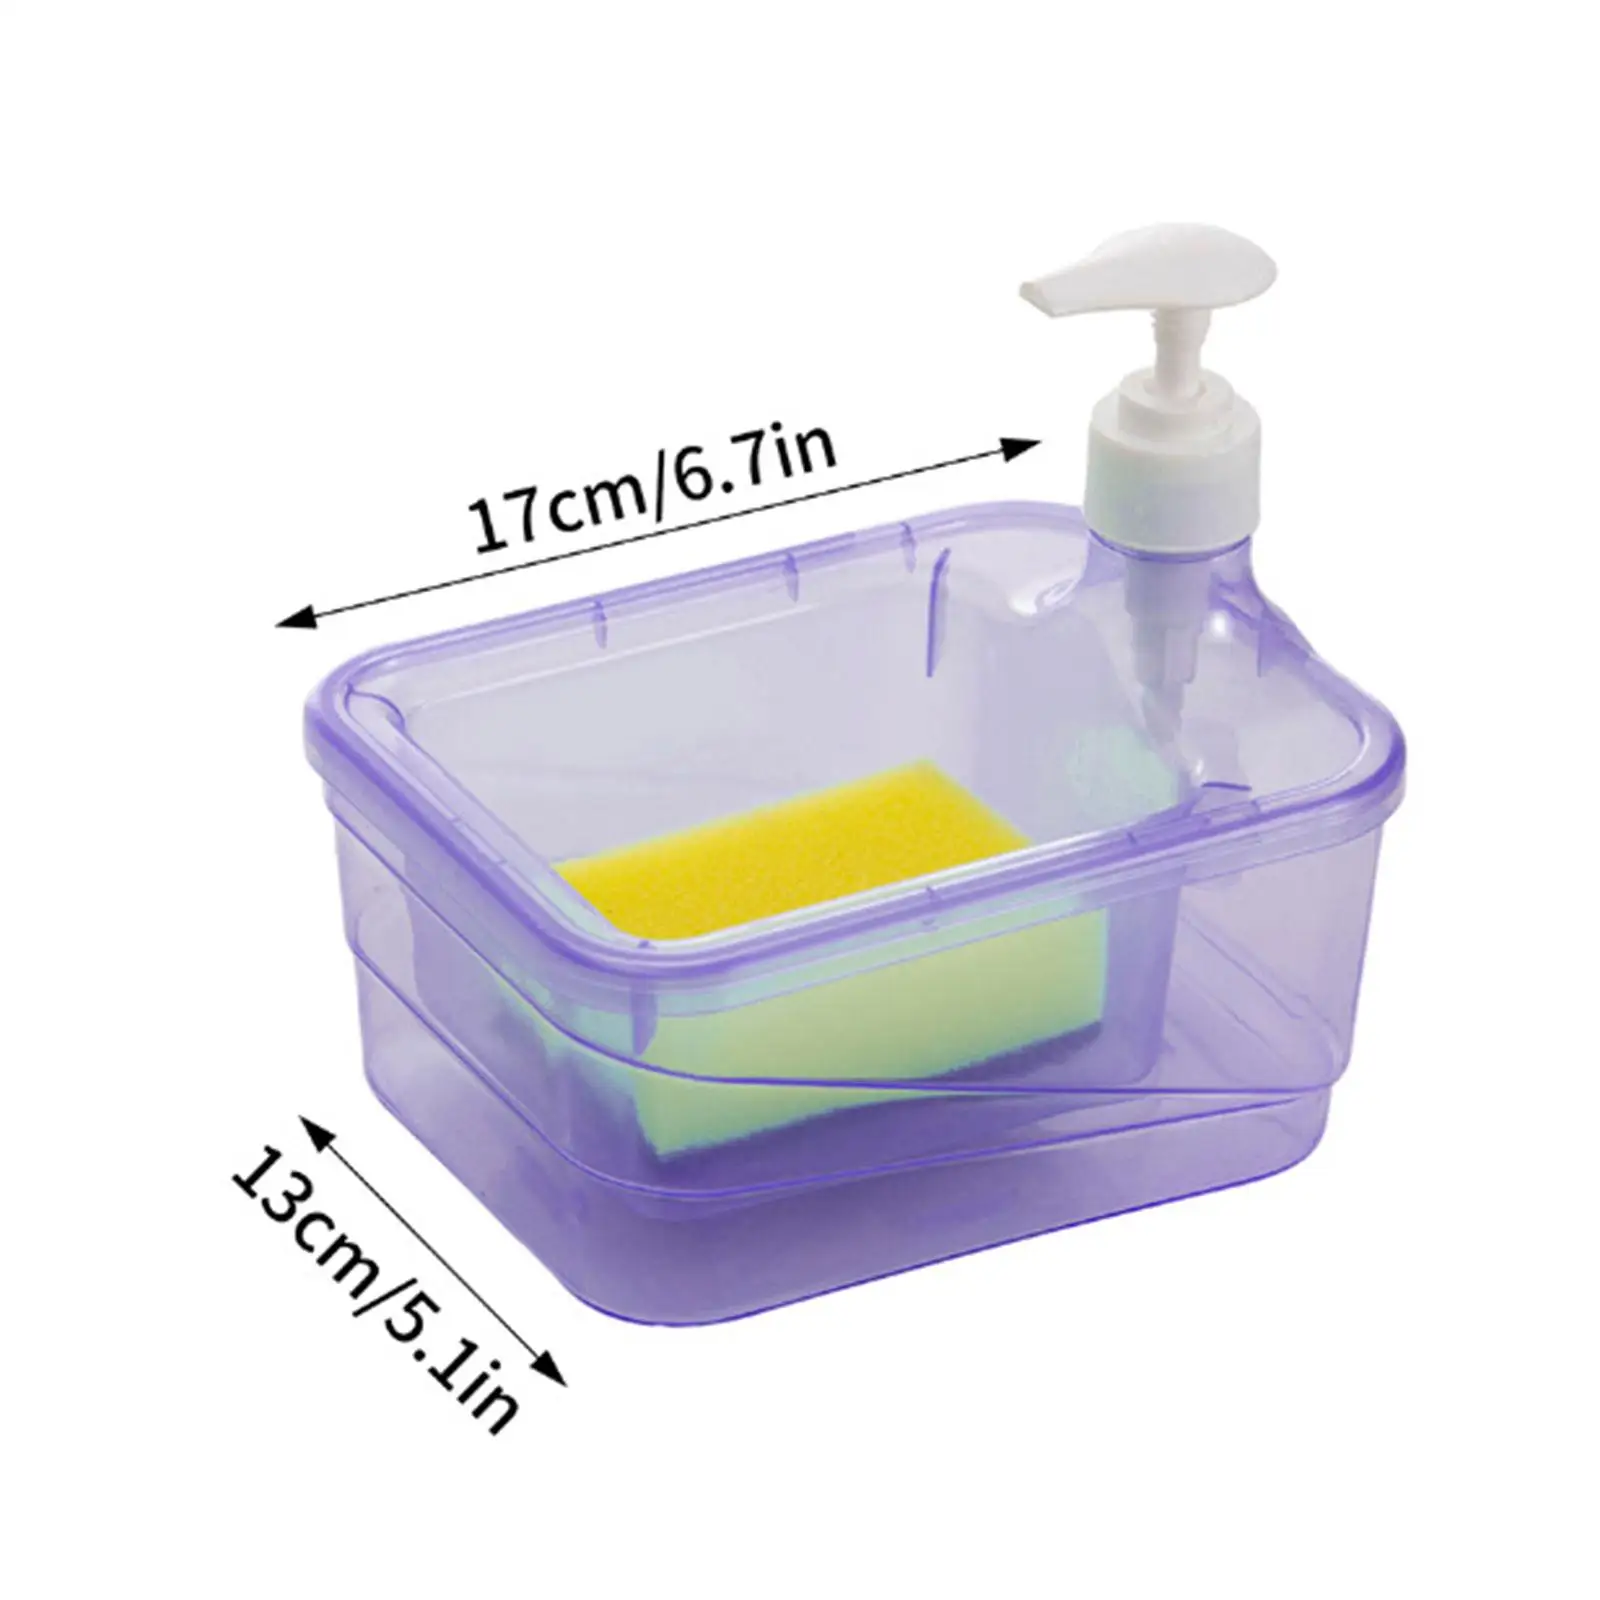 Soap Dispenser and Sponge Holder Multifunctional Refillable Anti Slip Portable Manual Liquid Pump Bottle 2 in 1 Gadgets for Cafe